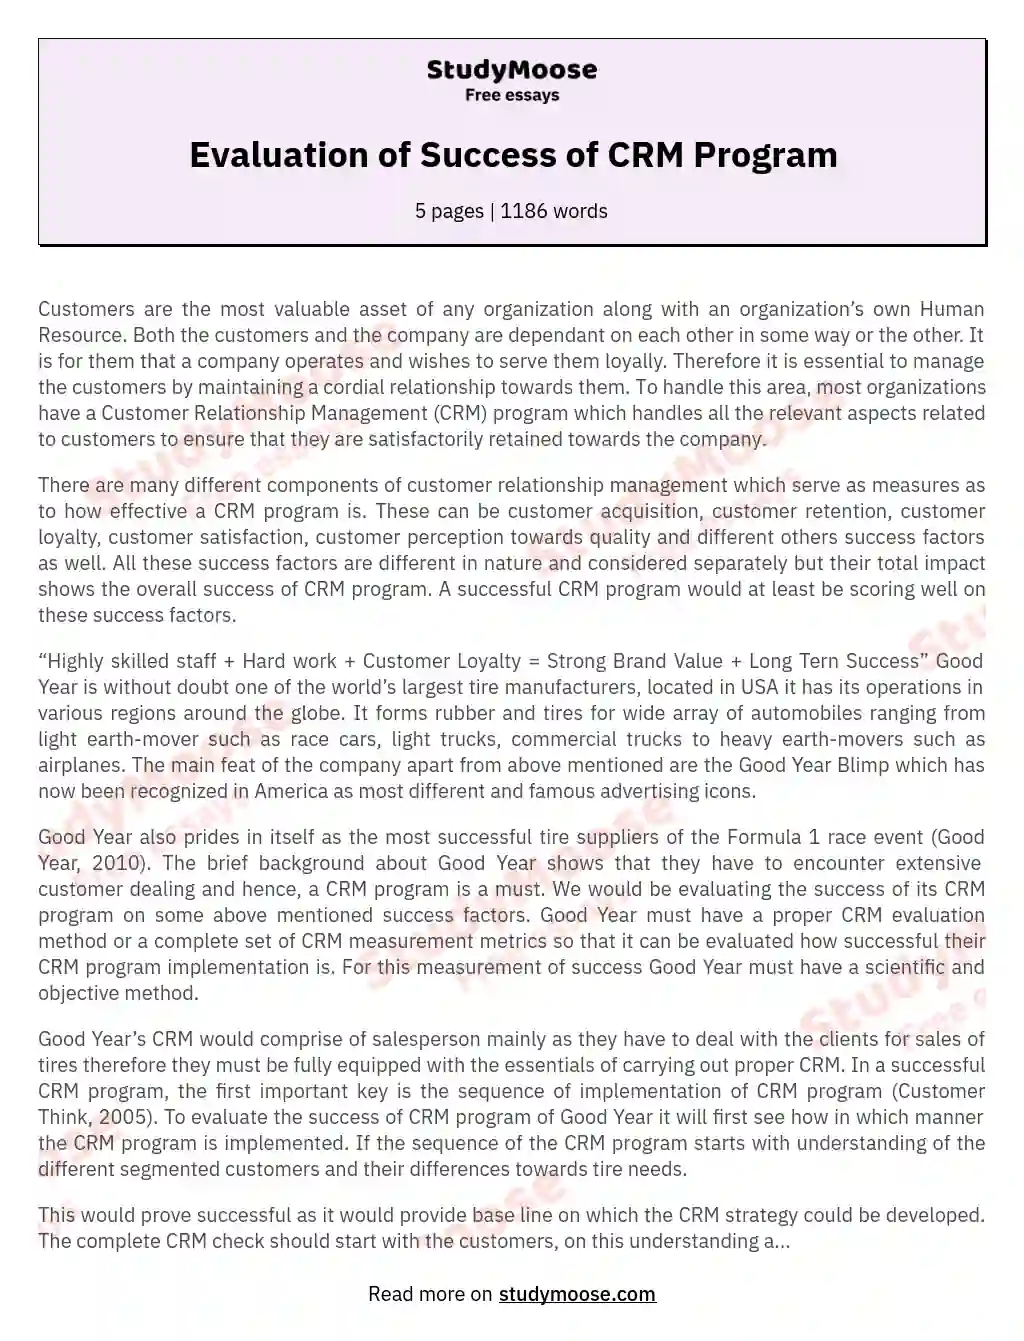 Evaluation of Success of CRM Program essay